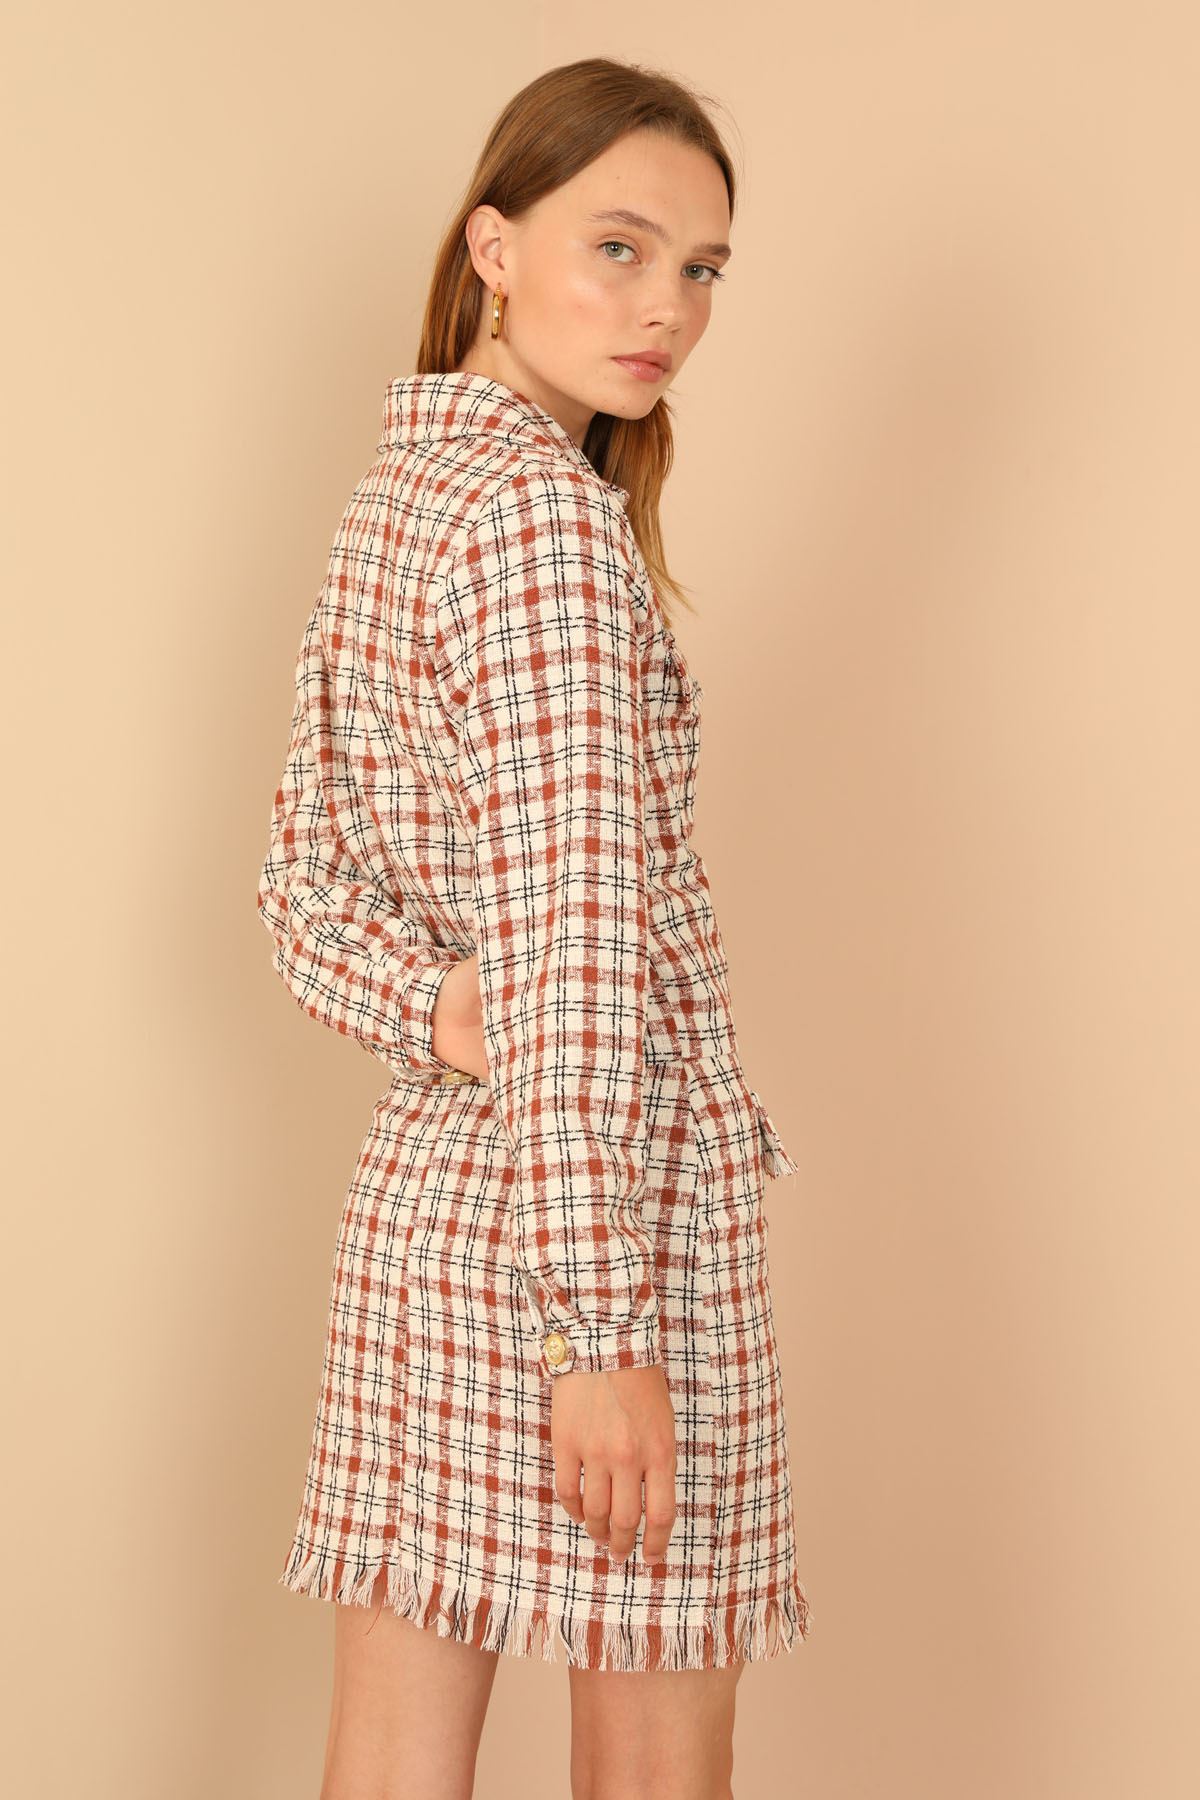 Channel Woven Fabrics Long Sleeve Plaid Button Women Jacket - Light Brown